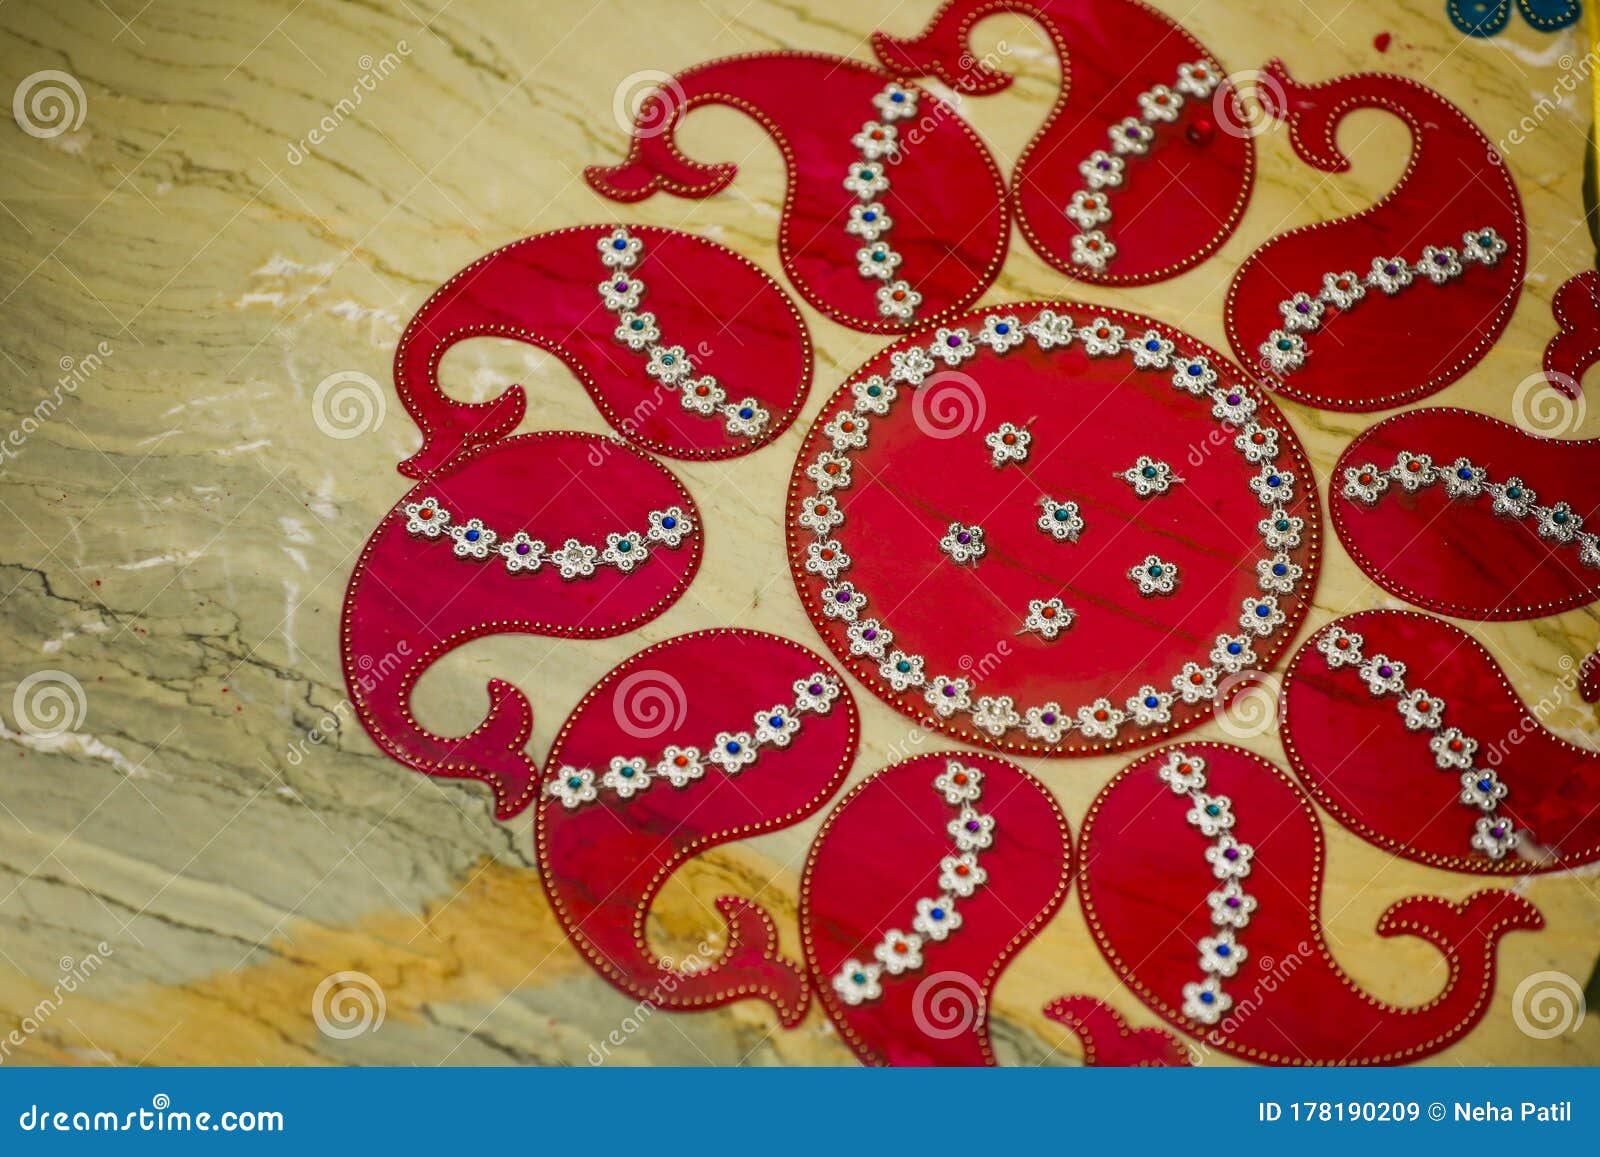 Traditional Indian Wedding Ceremony in Hinduism : Rangoli Design ...